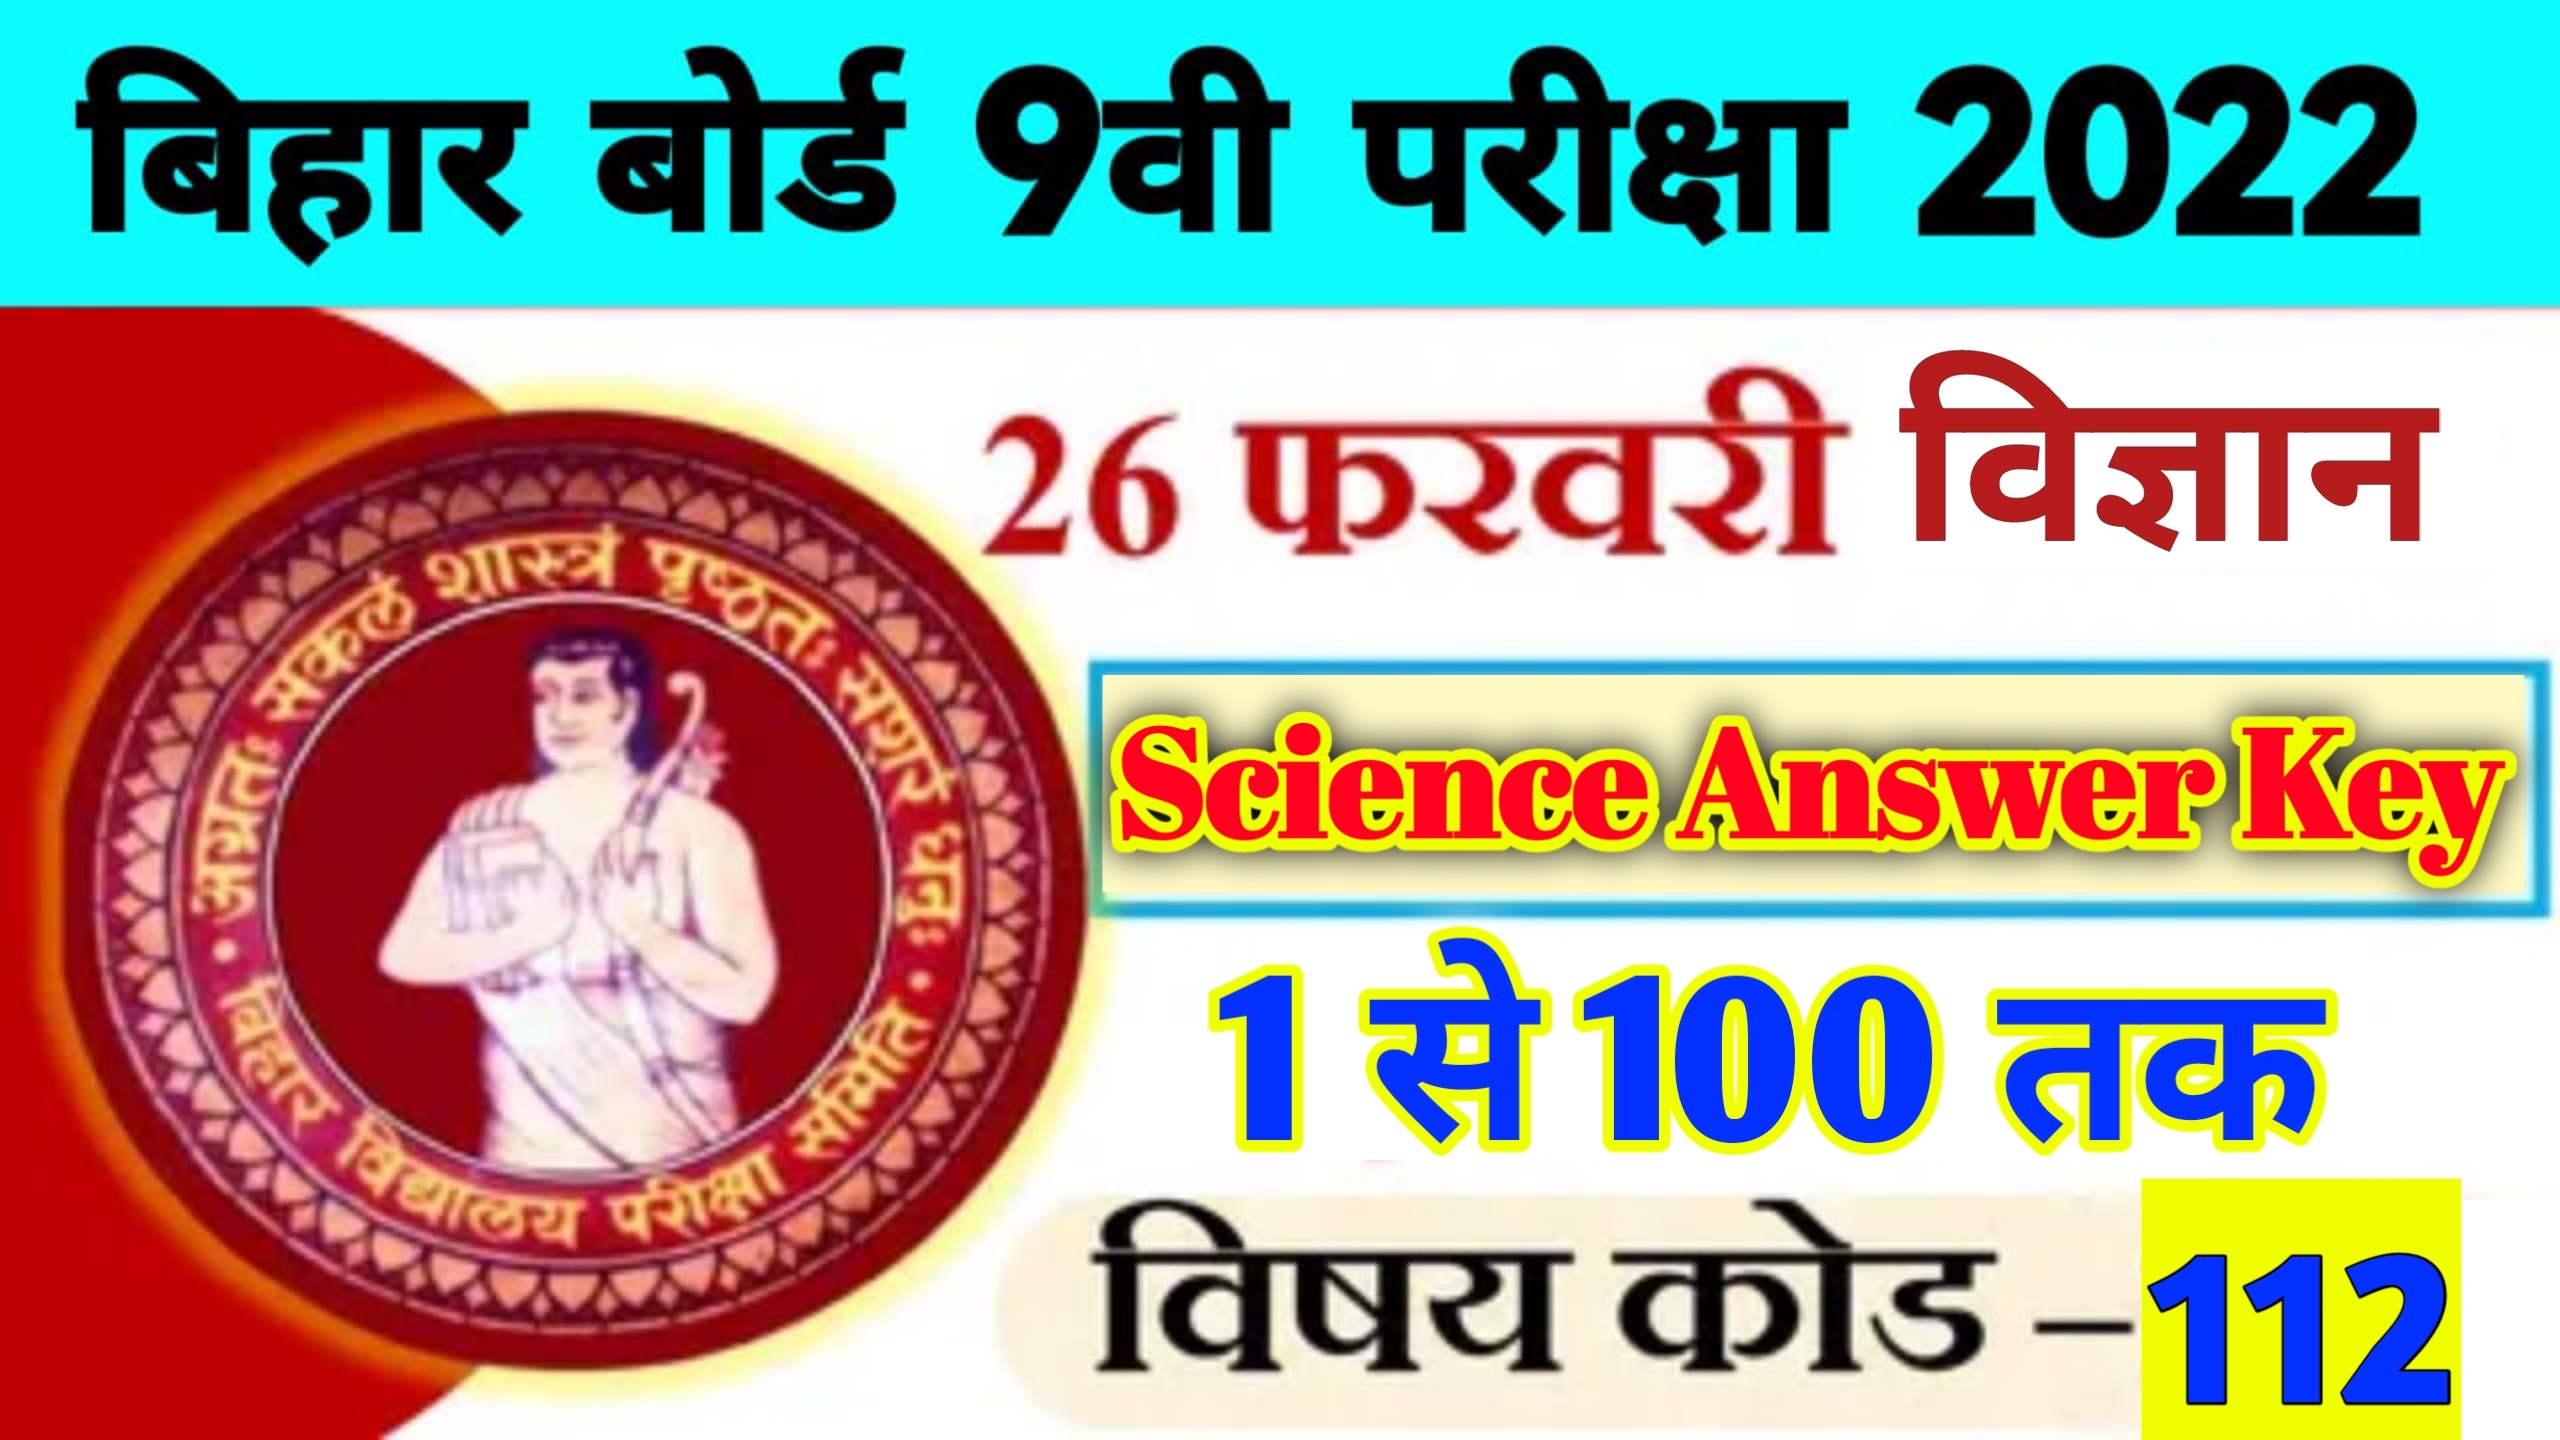 Bihar Board 9th Science Answer Key 2022 Pdf | Bseb 9th Science Question 2022